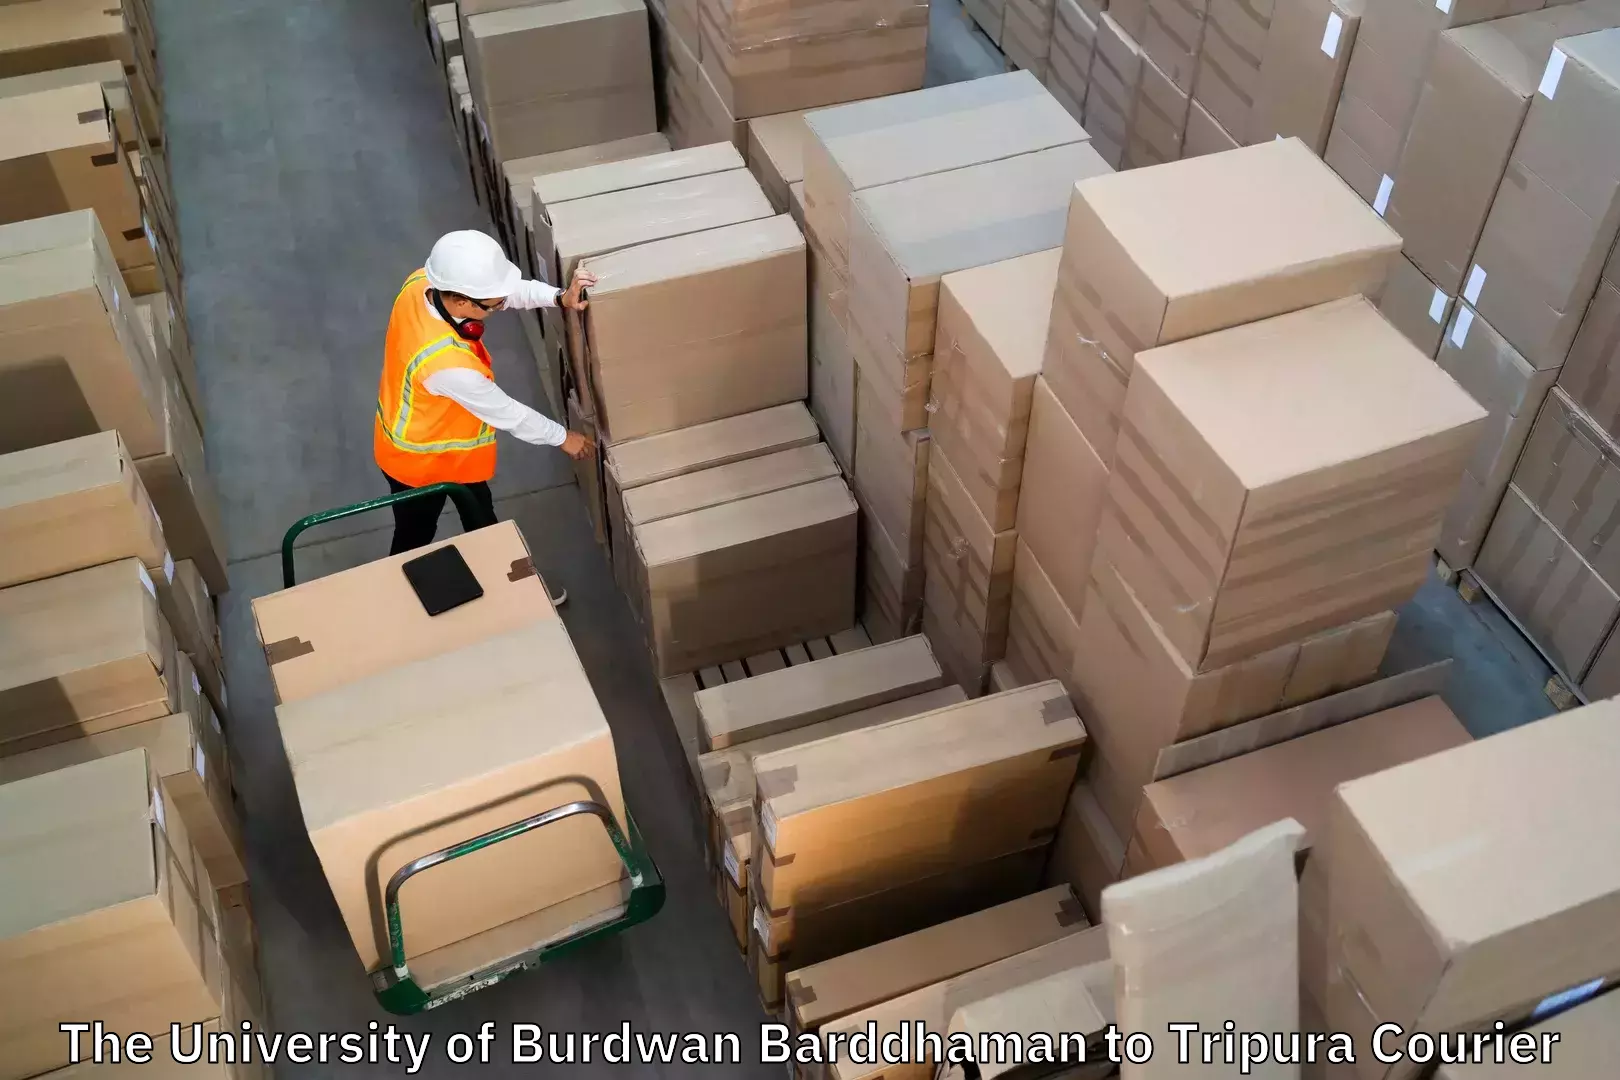 Door to door luggage delivery in The University of Burdwan Barddhaman to Udaipur Tripura